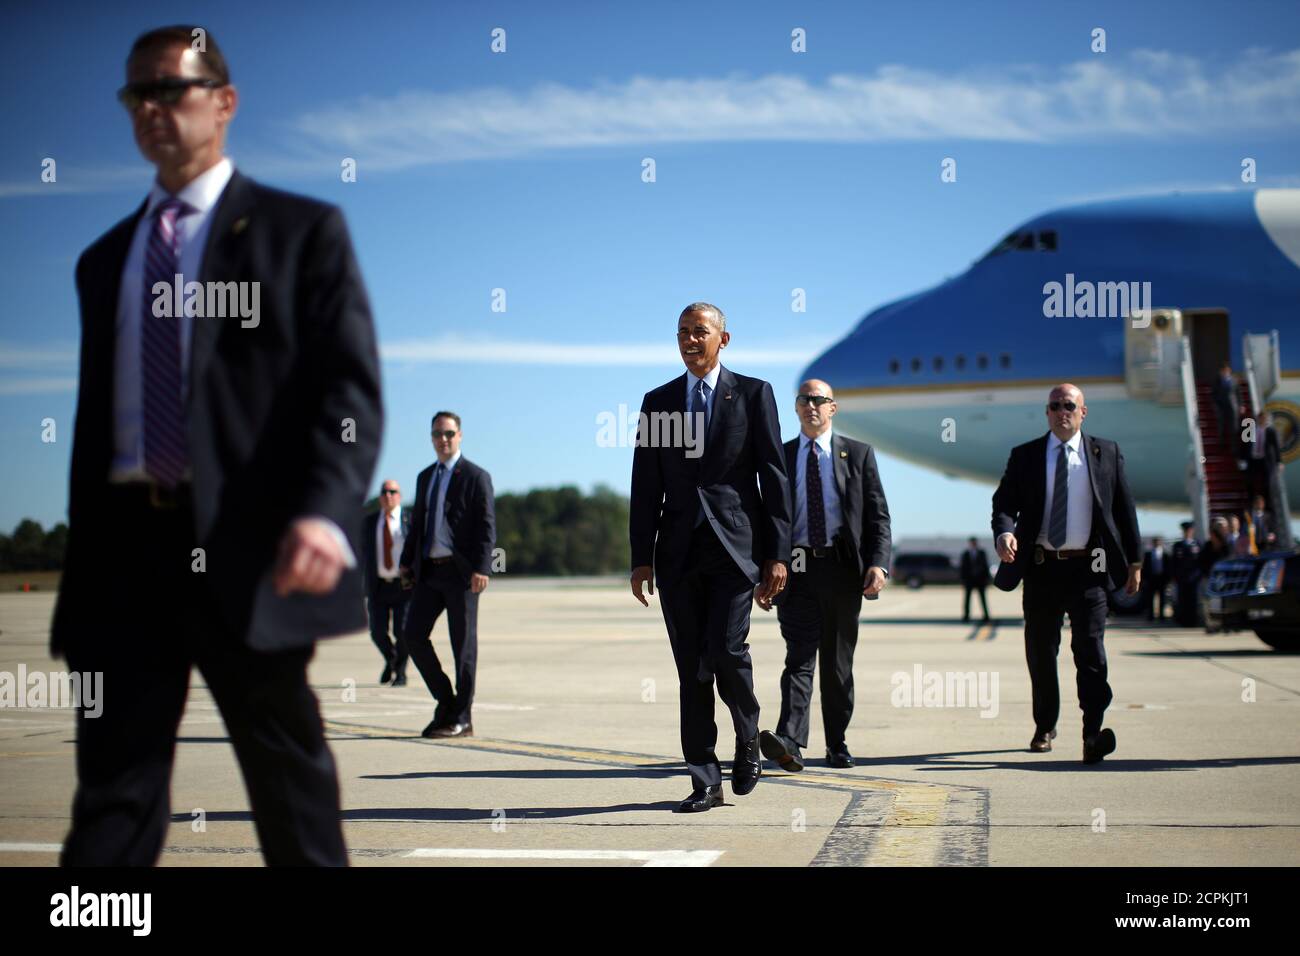 U.S. President Barack Obama arrives at Piedmont Triad International Airport in Greensboro, North Carolina, U.S. October 11, 2016.  REUTERS/Carlos Barria Stock Photo